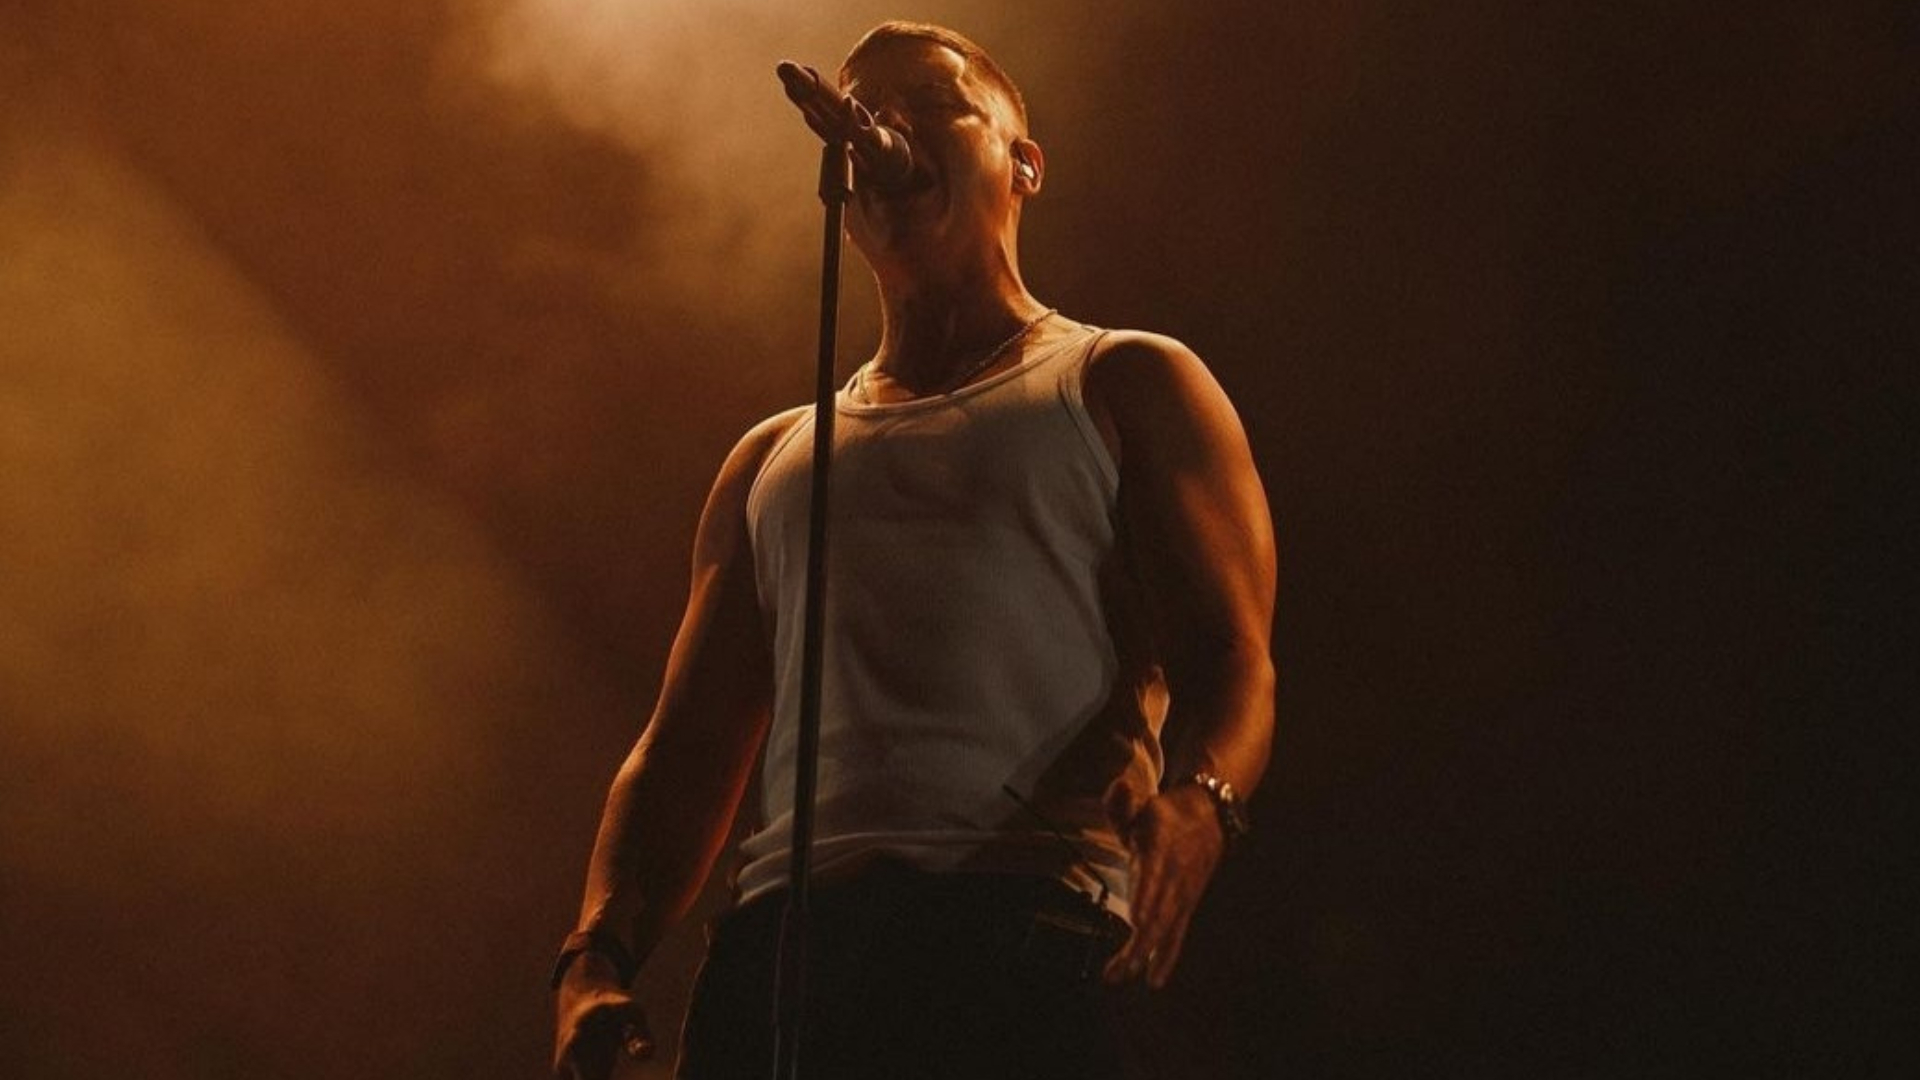 Lukas Graham: Meet the Danish Singer Behind '7 Years